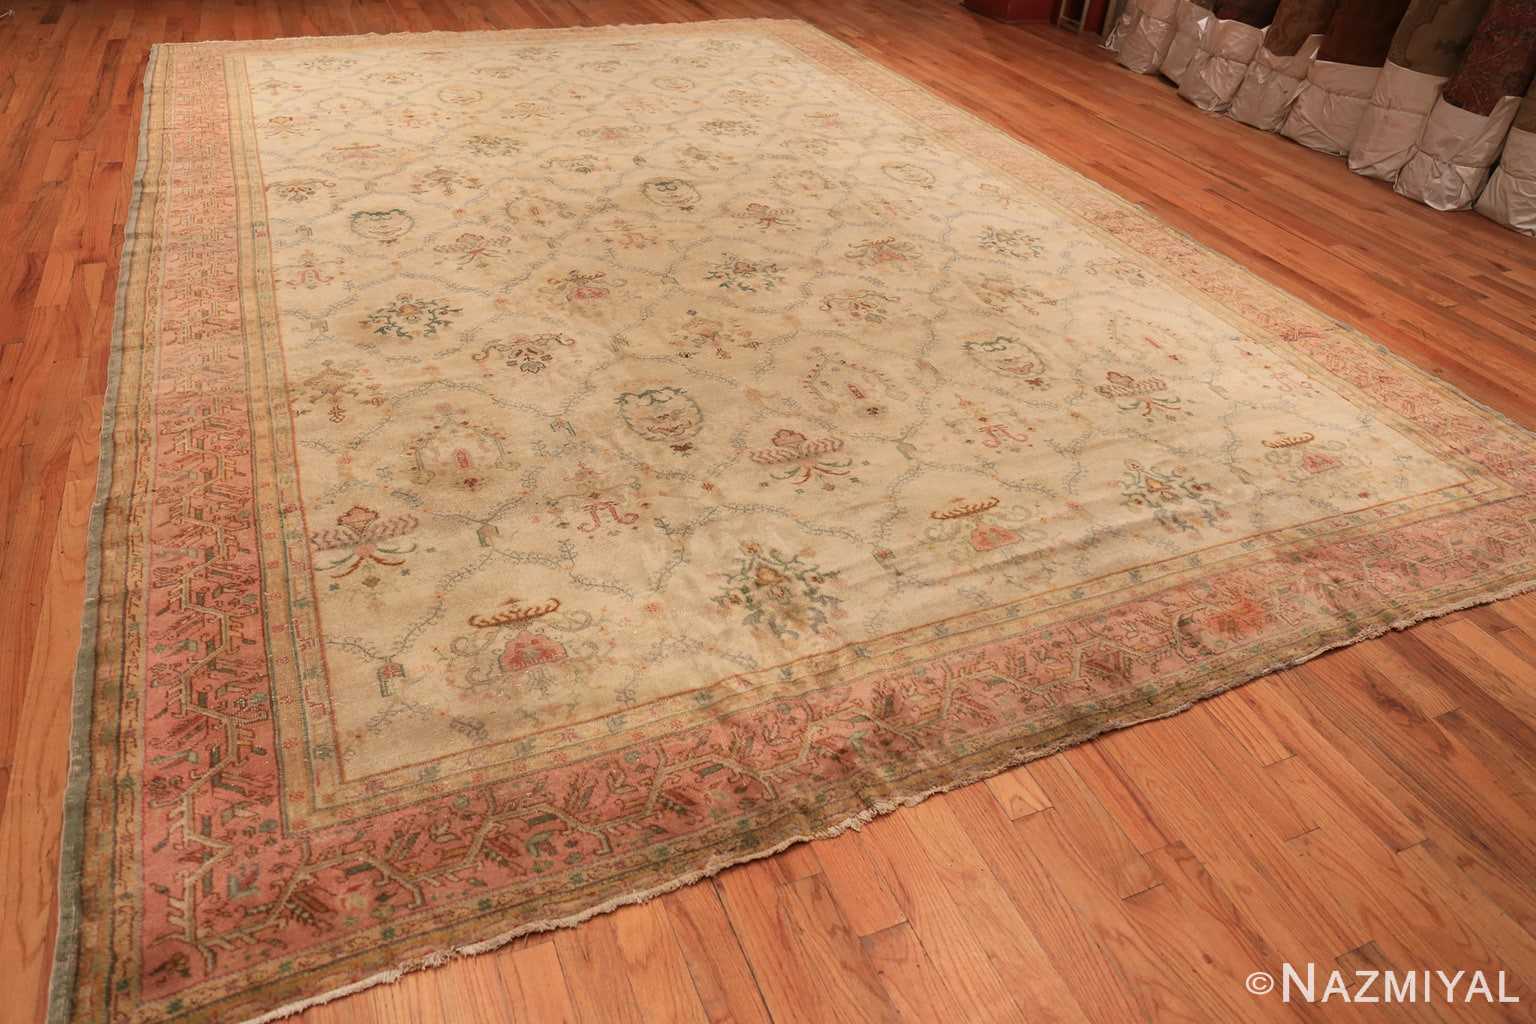 Full Vintage Turkish Sivas carpet 50327 by Nazmiyal Antique Rugs in NYC